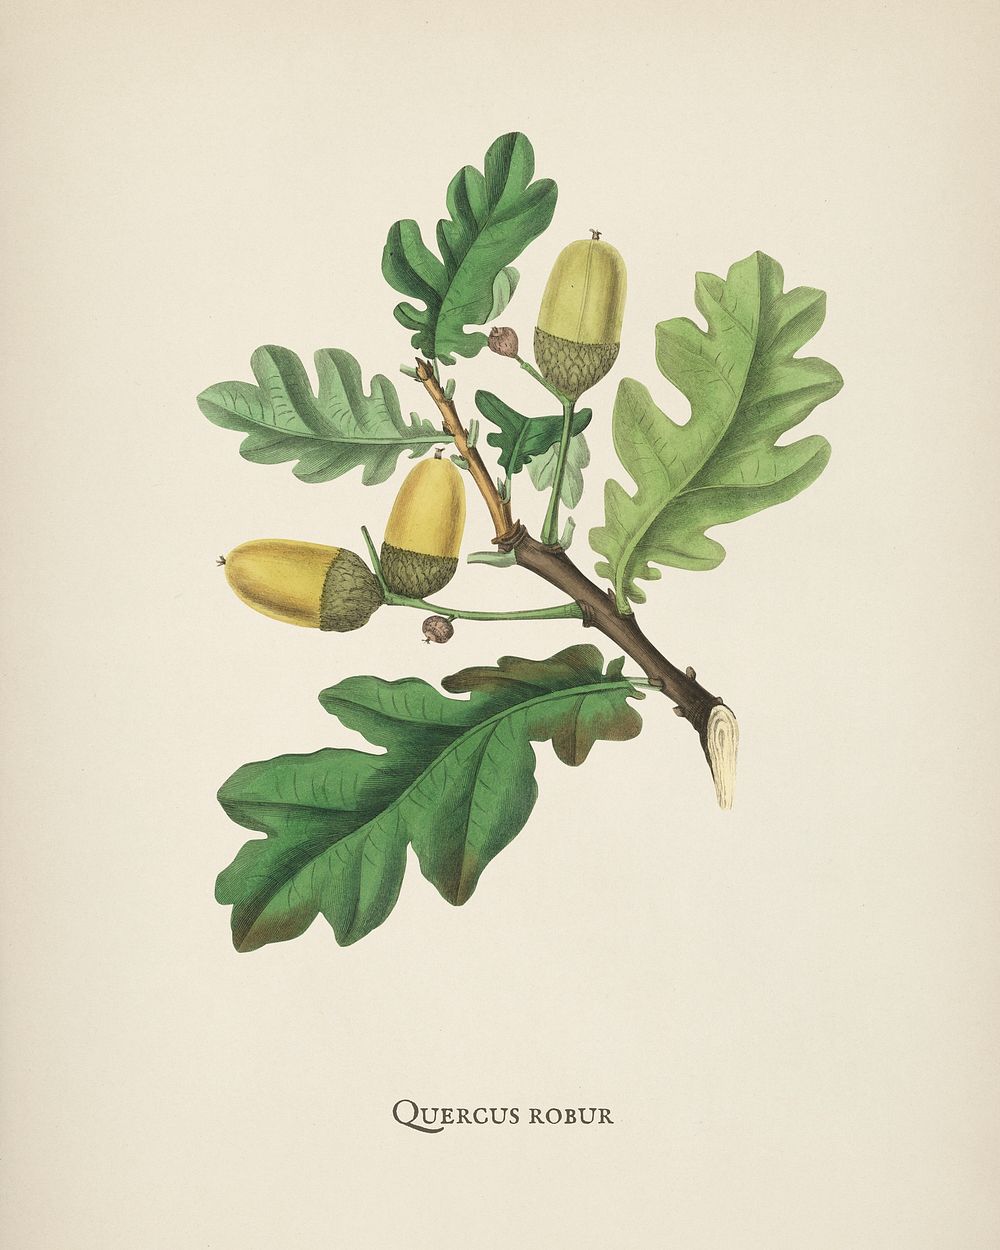 English oak (Quercus) robur illustration from Medical Botany (1836) by John Stephenson and James Morss Churchill.